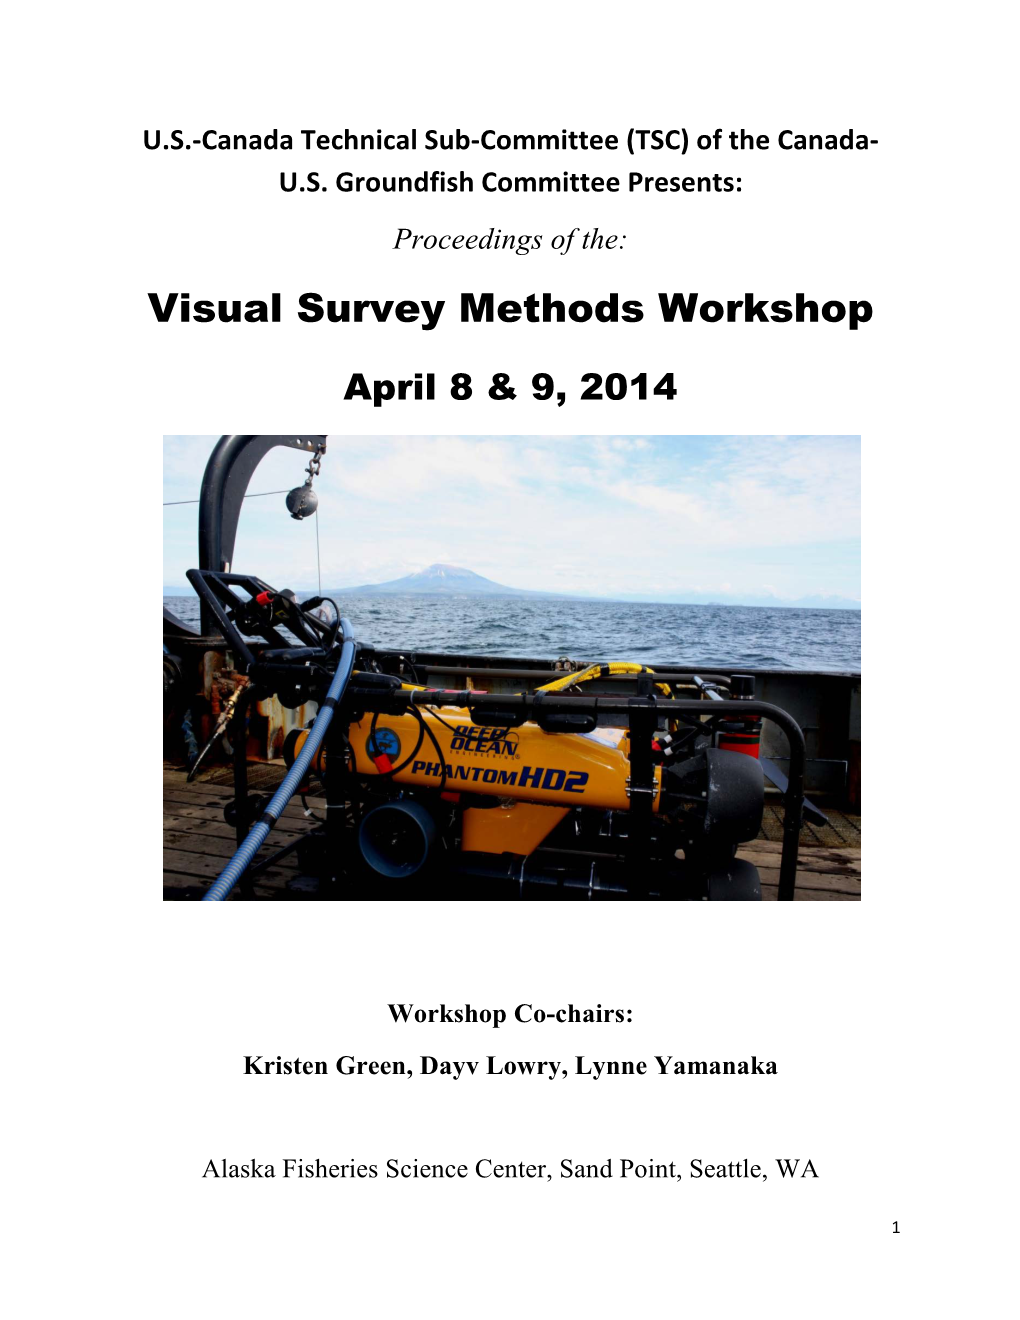 Visual Survey Methods Workshop (April 8 & 9, 2014)